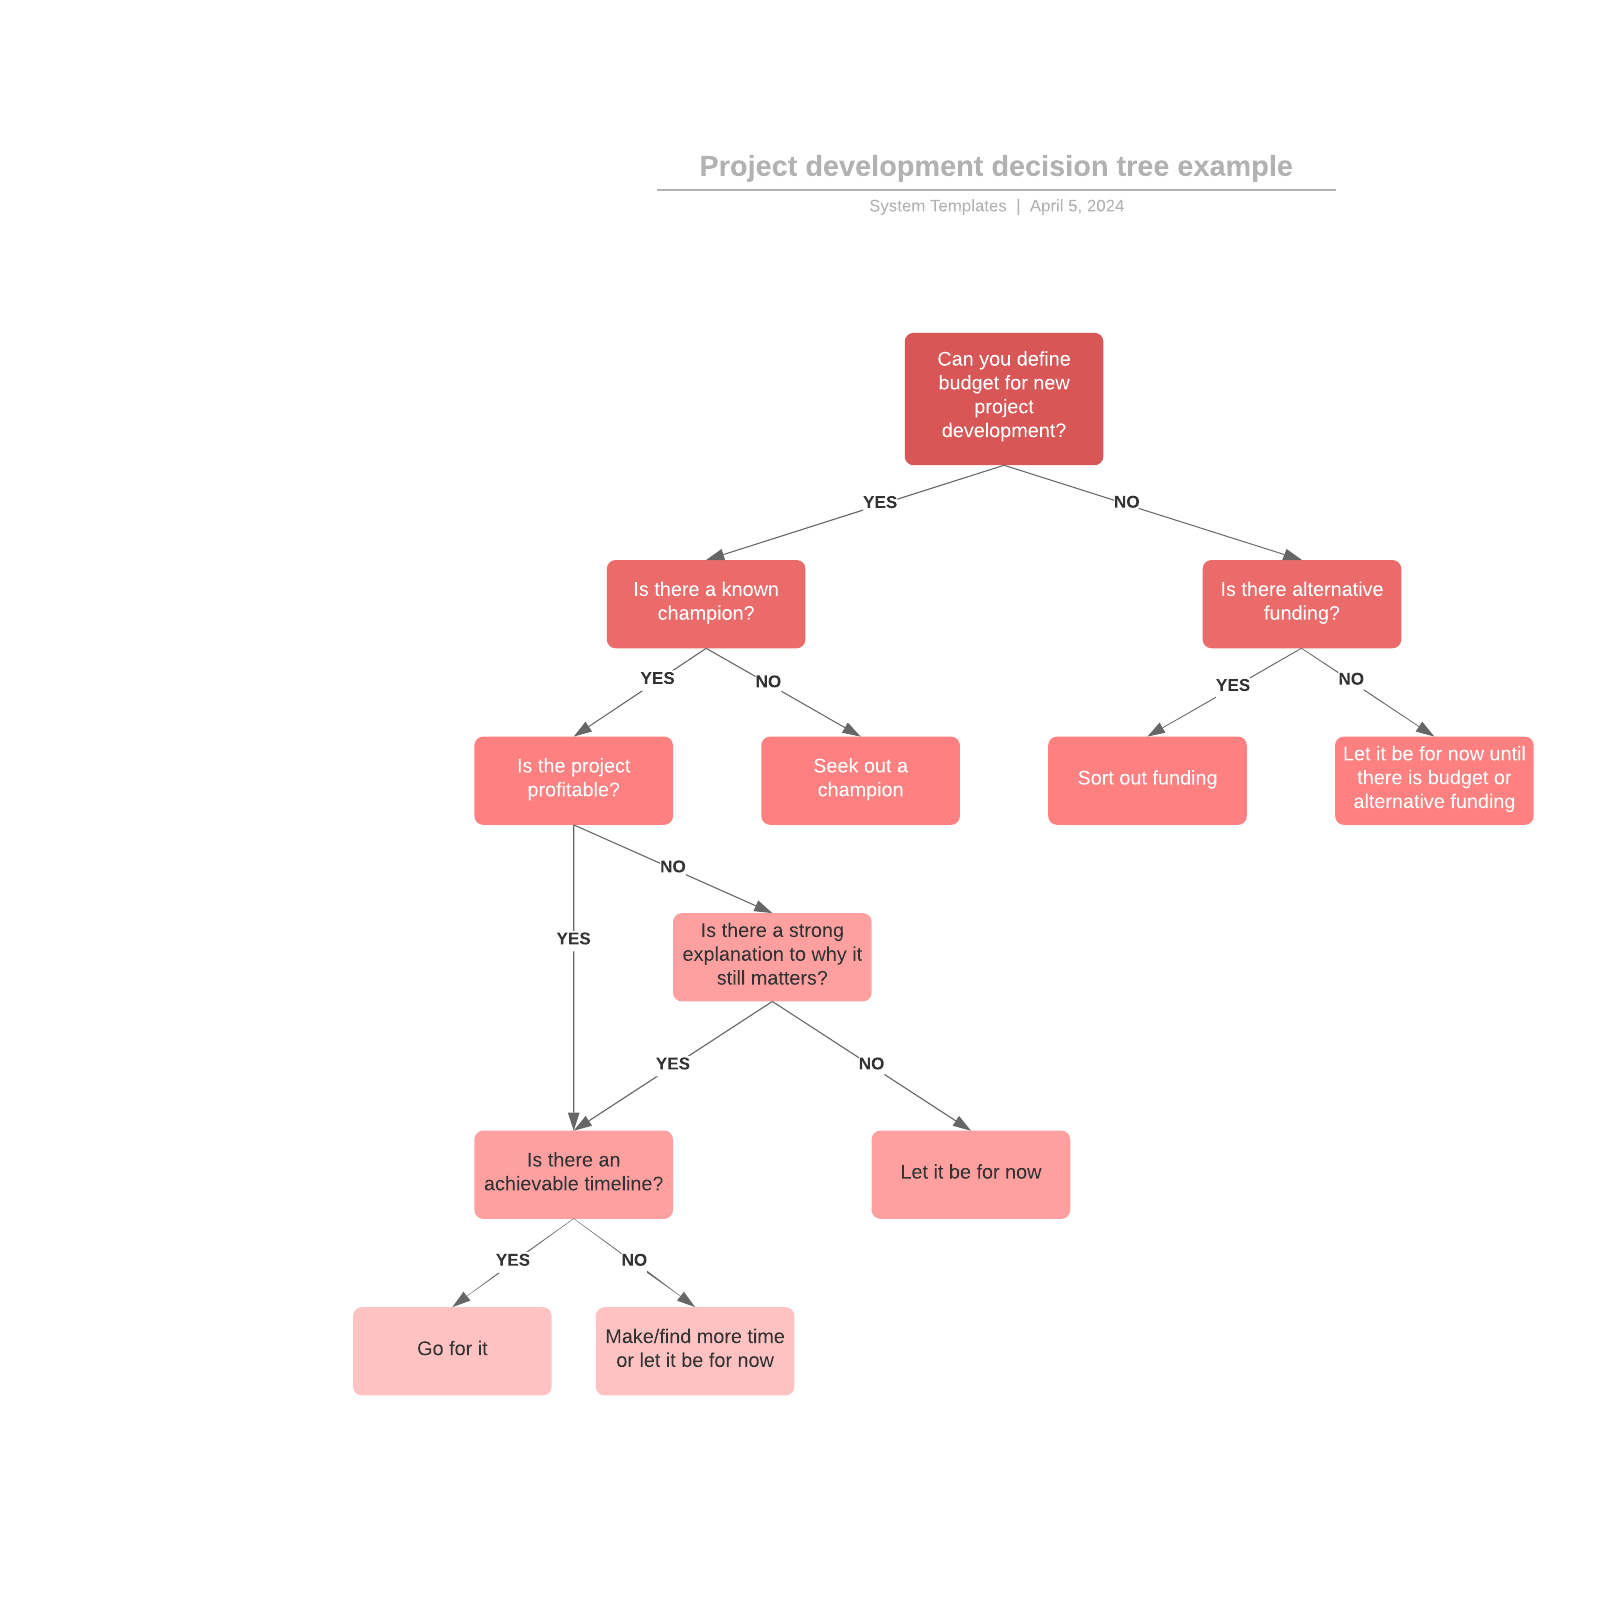 Project development decision tree example example